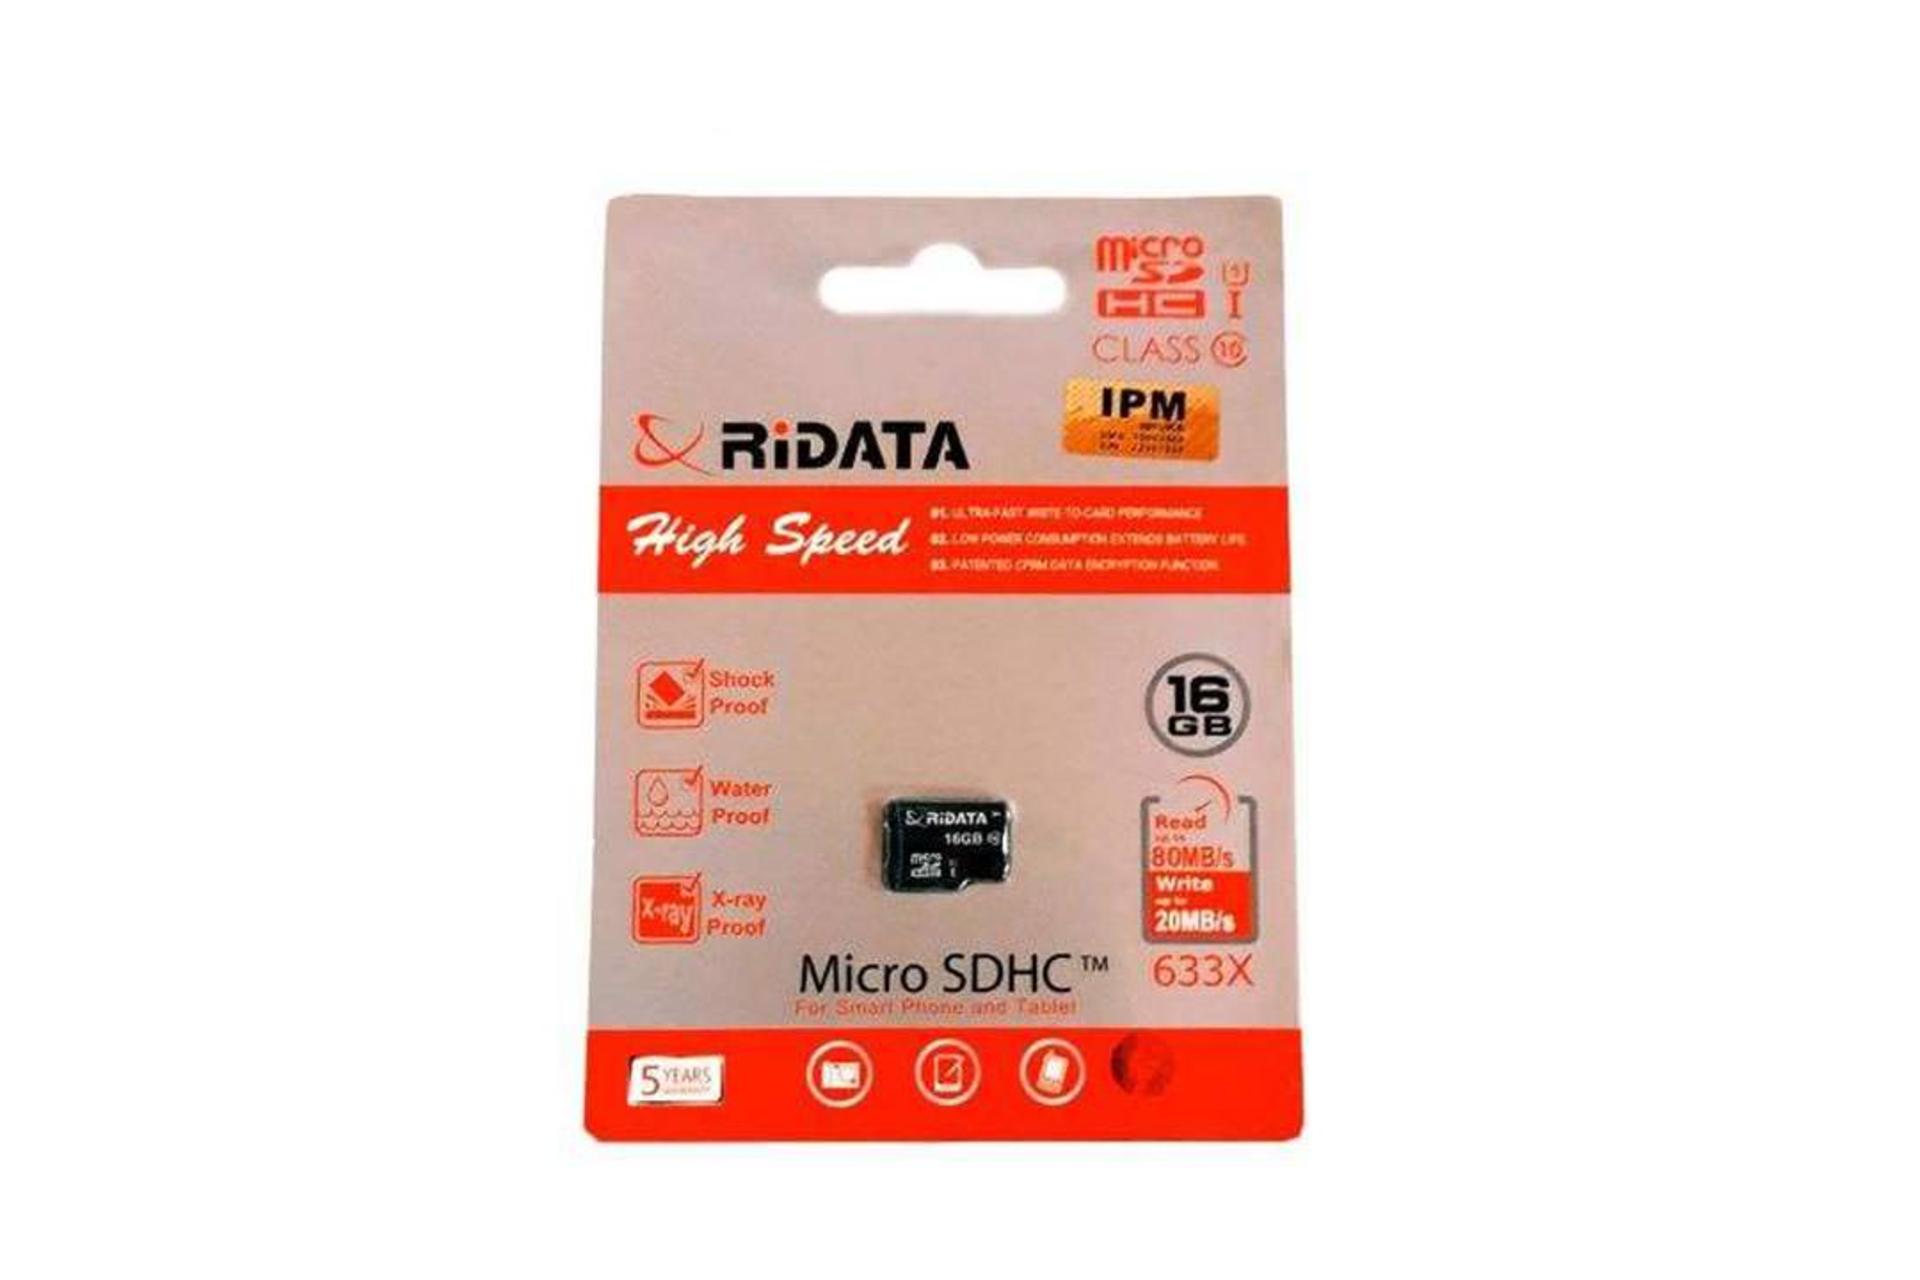 RiDATA High Speed microSDHC Class 10 UHS-I U1 16GB